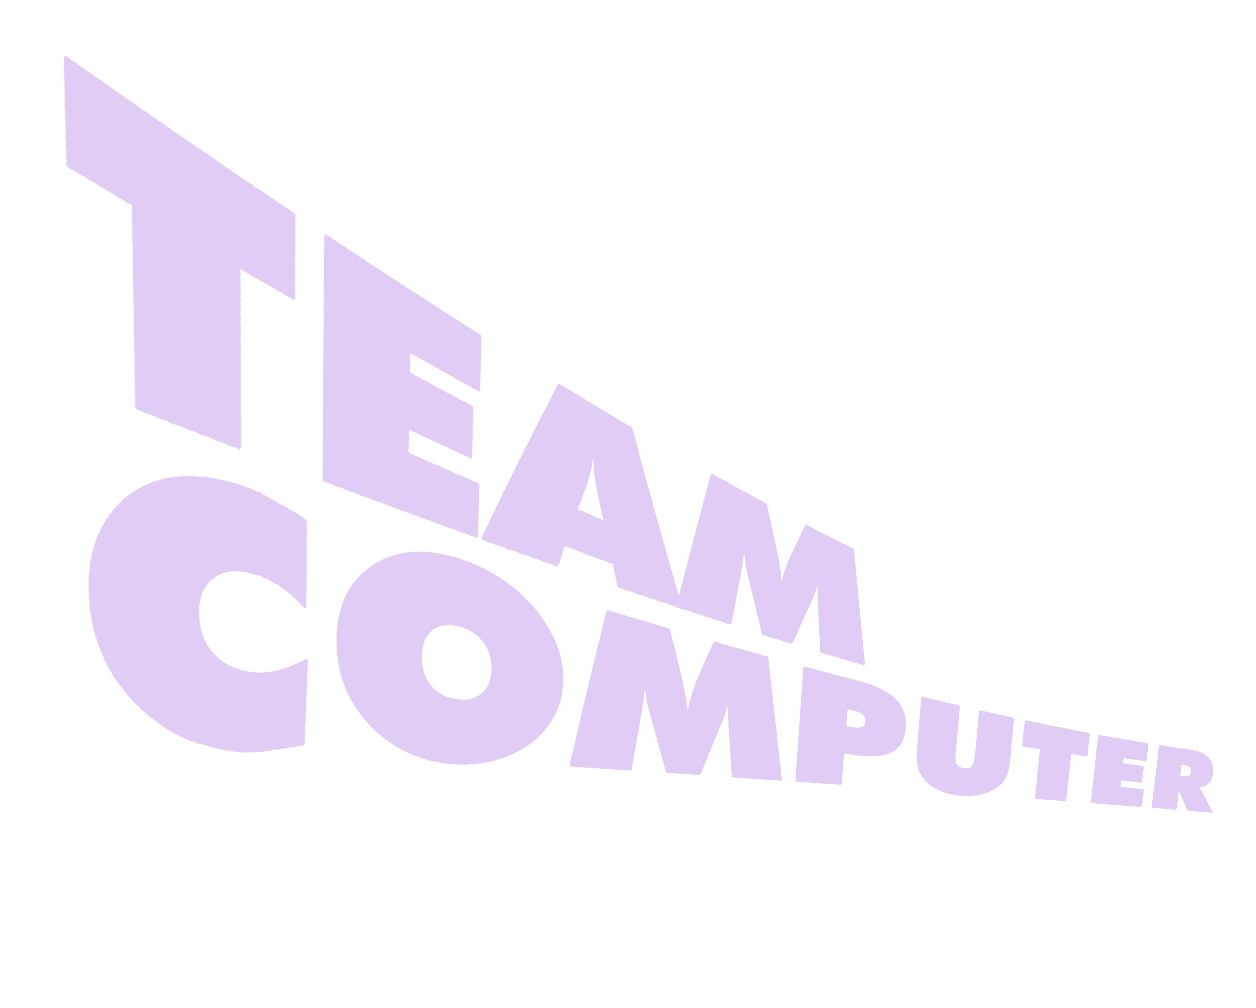 Team Computer